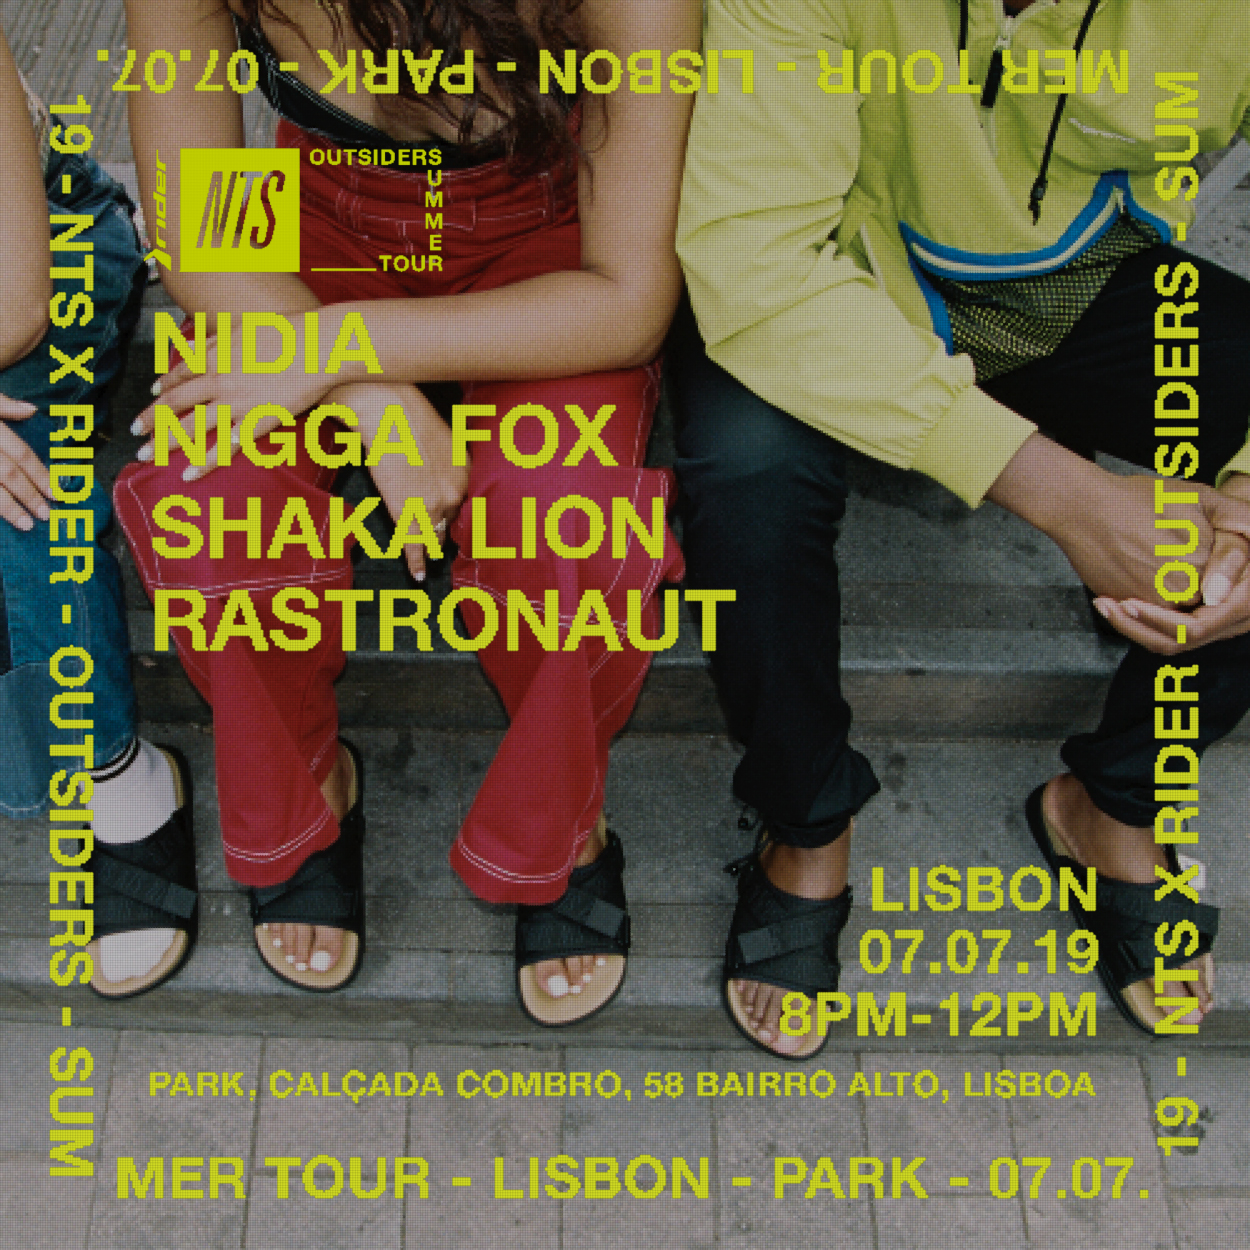 Square Still - Event - NTS x Rider Outsiders Tour - Nidia, Nigga Fox, Shaka Lion, Rastronaut  @ Park Lisbon.jpg